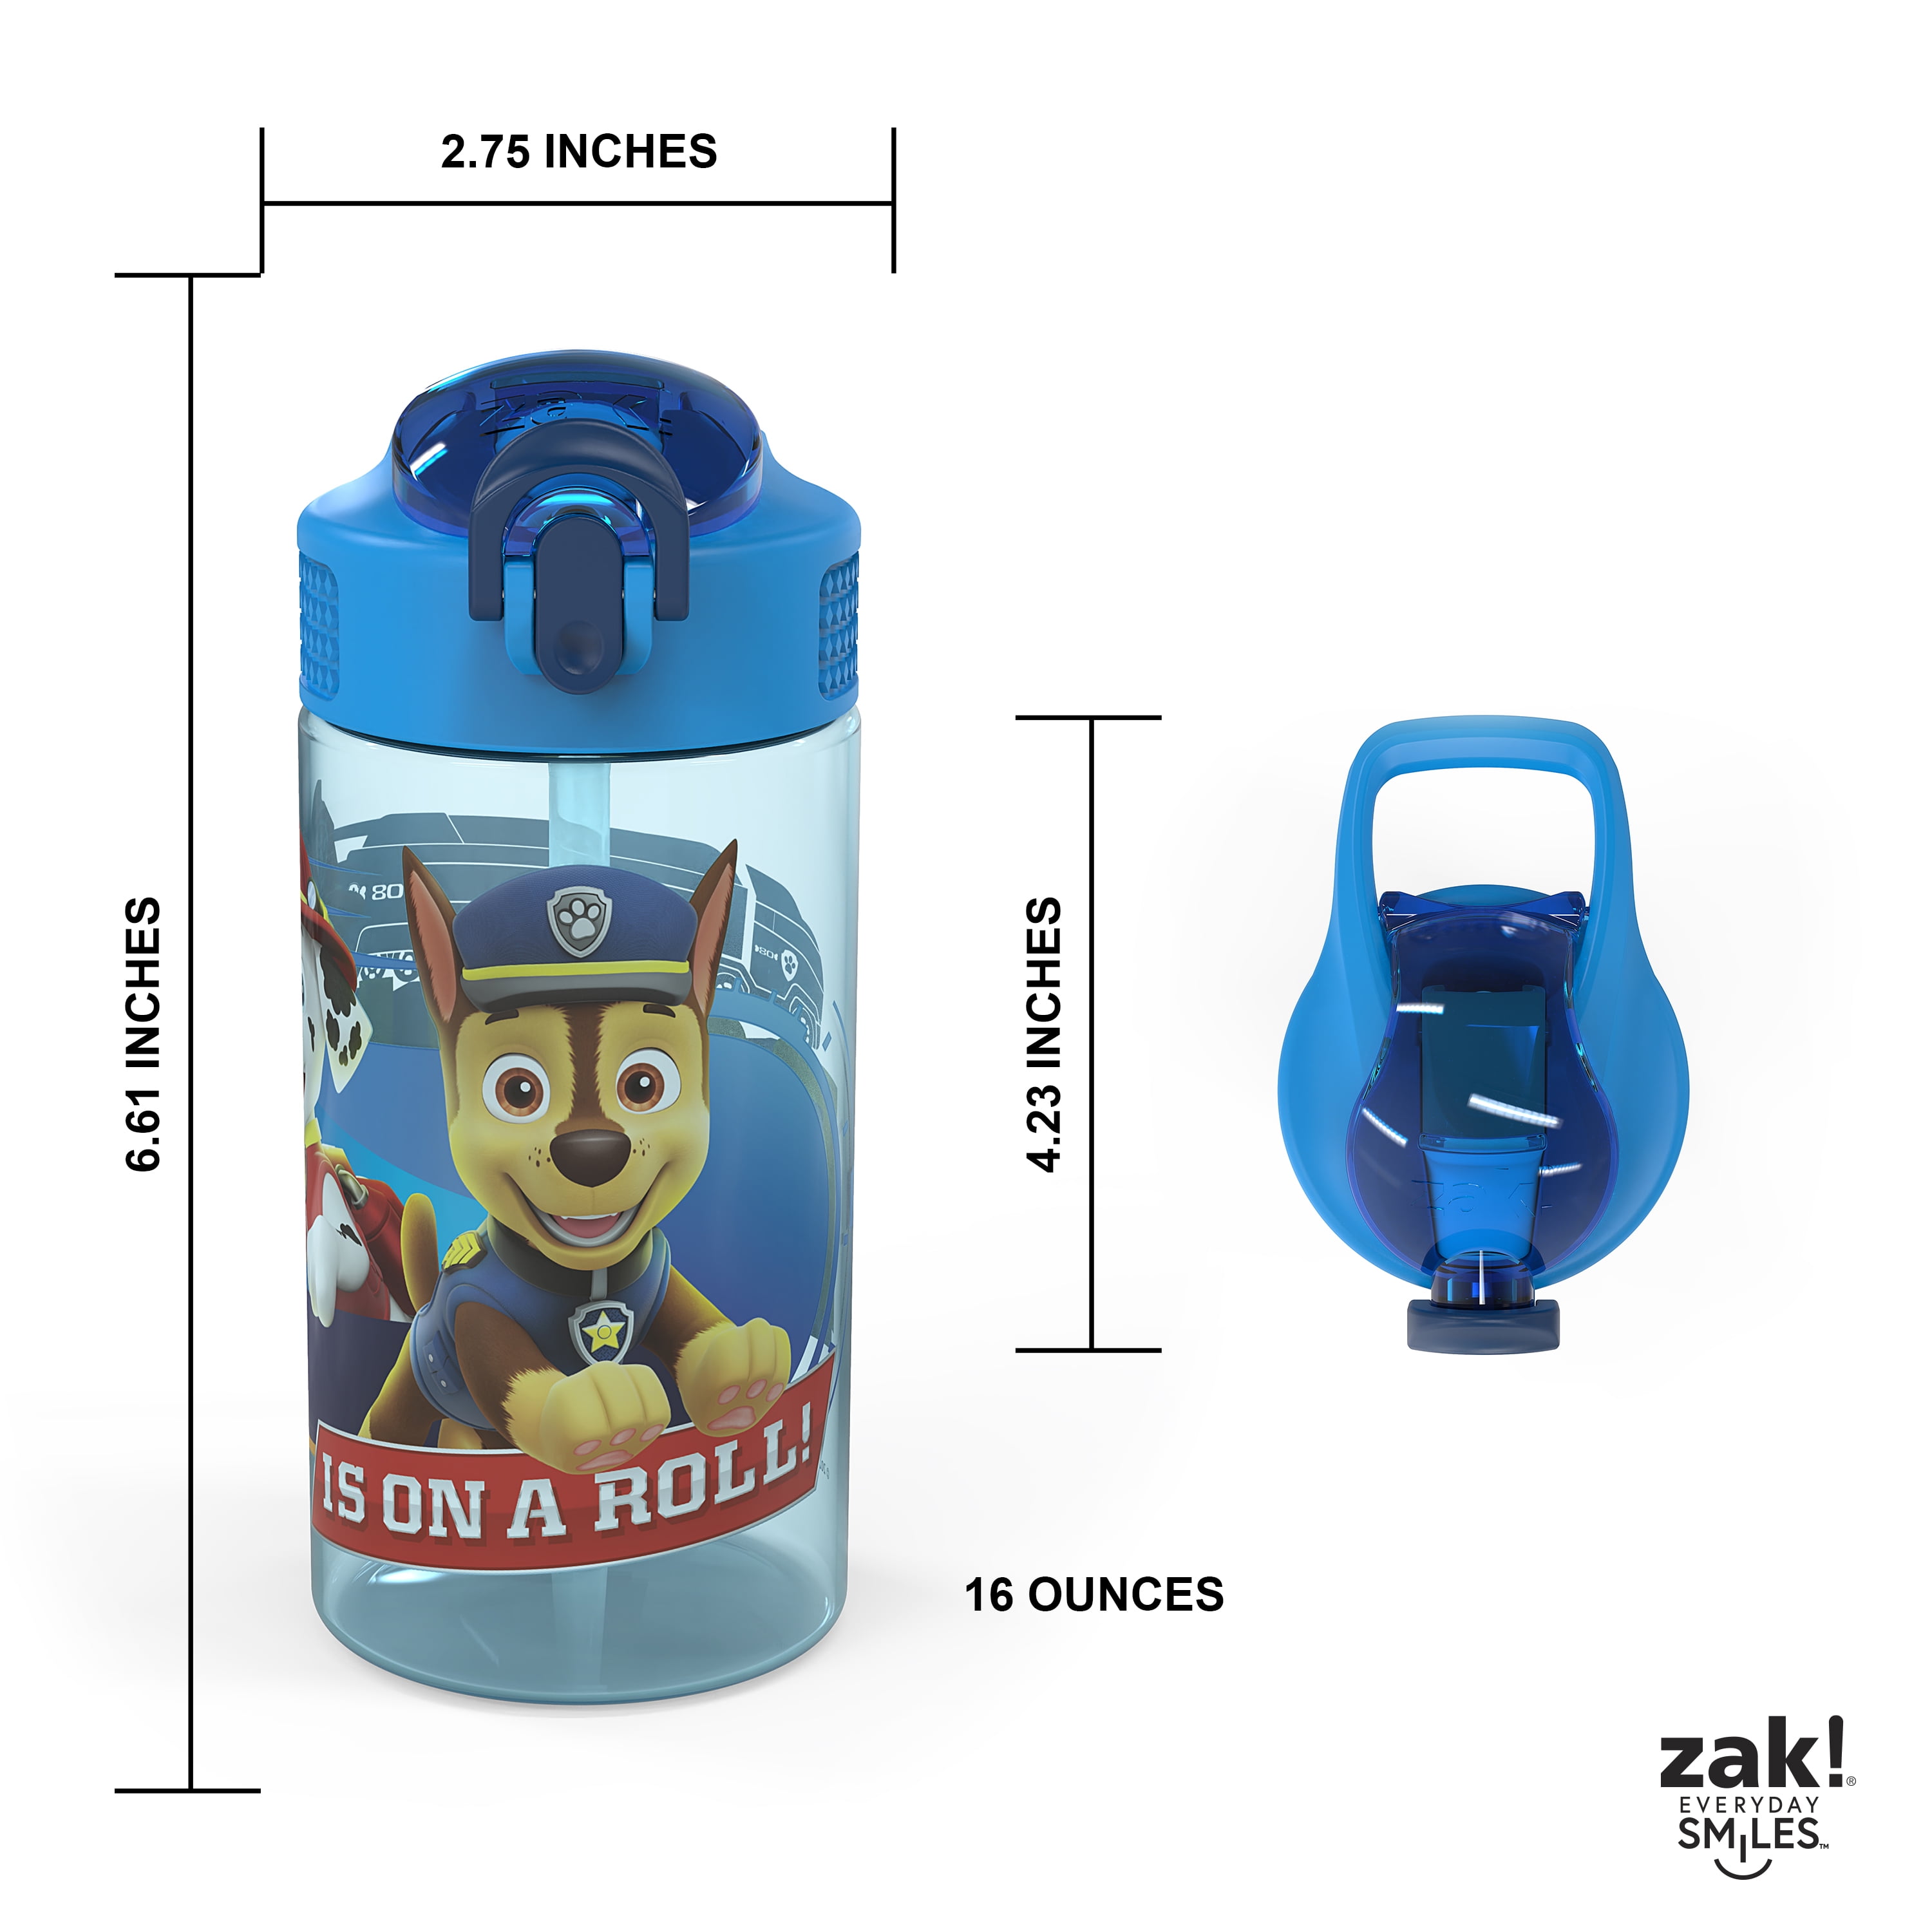 Cool Gear & Paw Patrol 16.5 oz Character Water Bottle Great Gift Idea